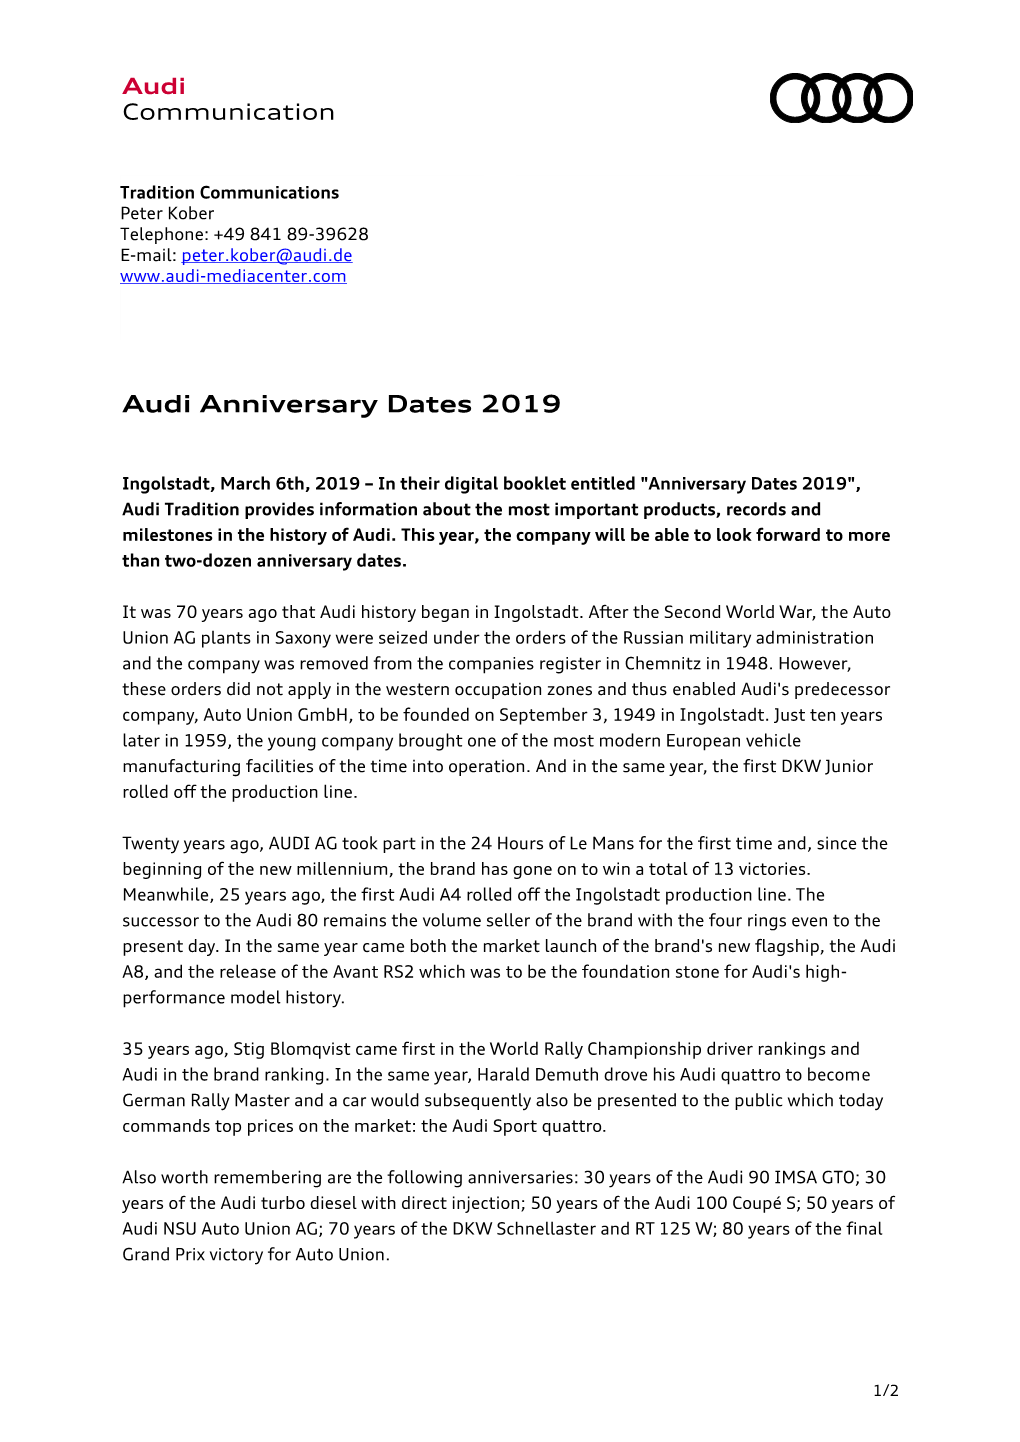 Audi Anniversary Dates 2019